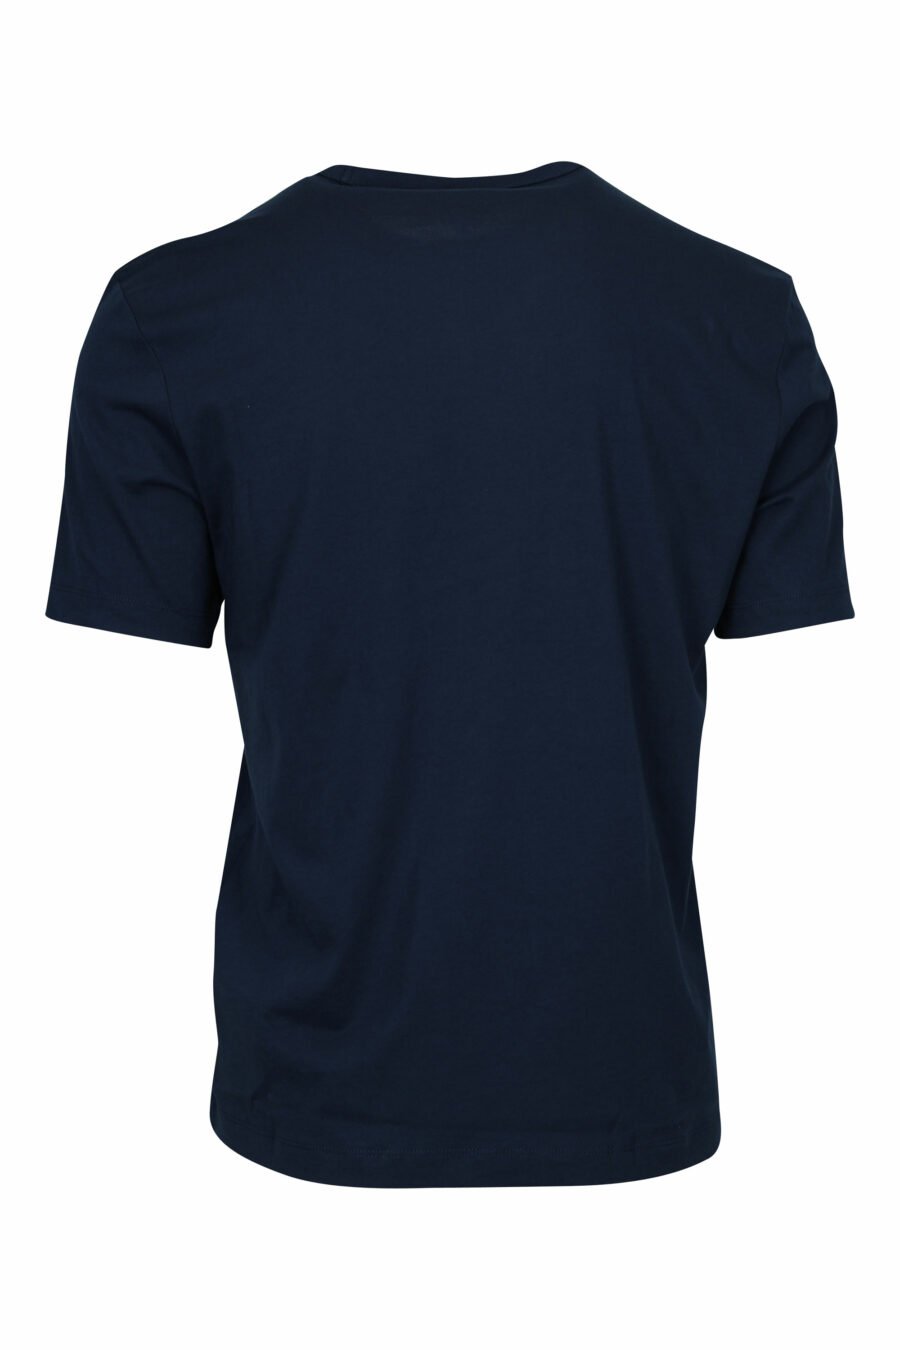 Camiseta azul con minilogo estampado bolsillo - 8058610799946 1